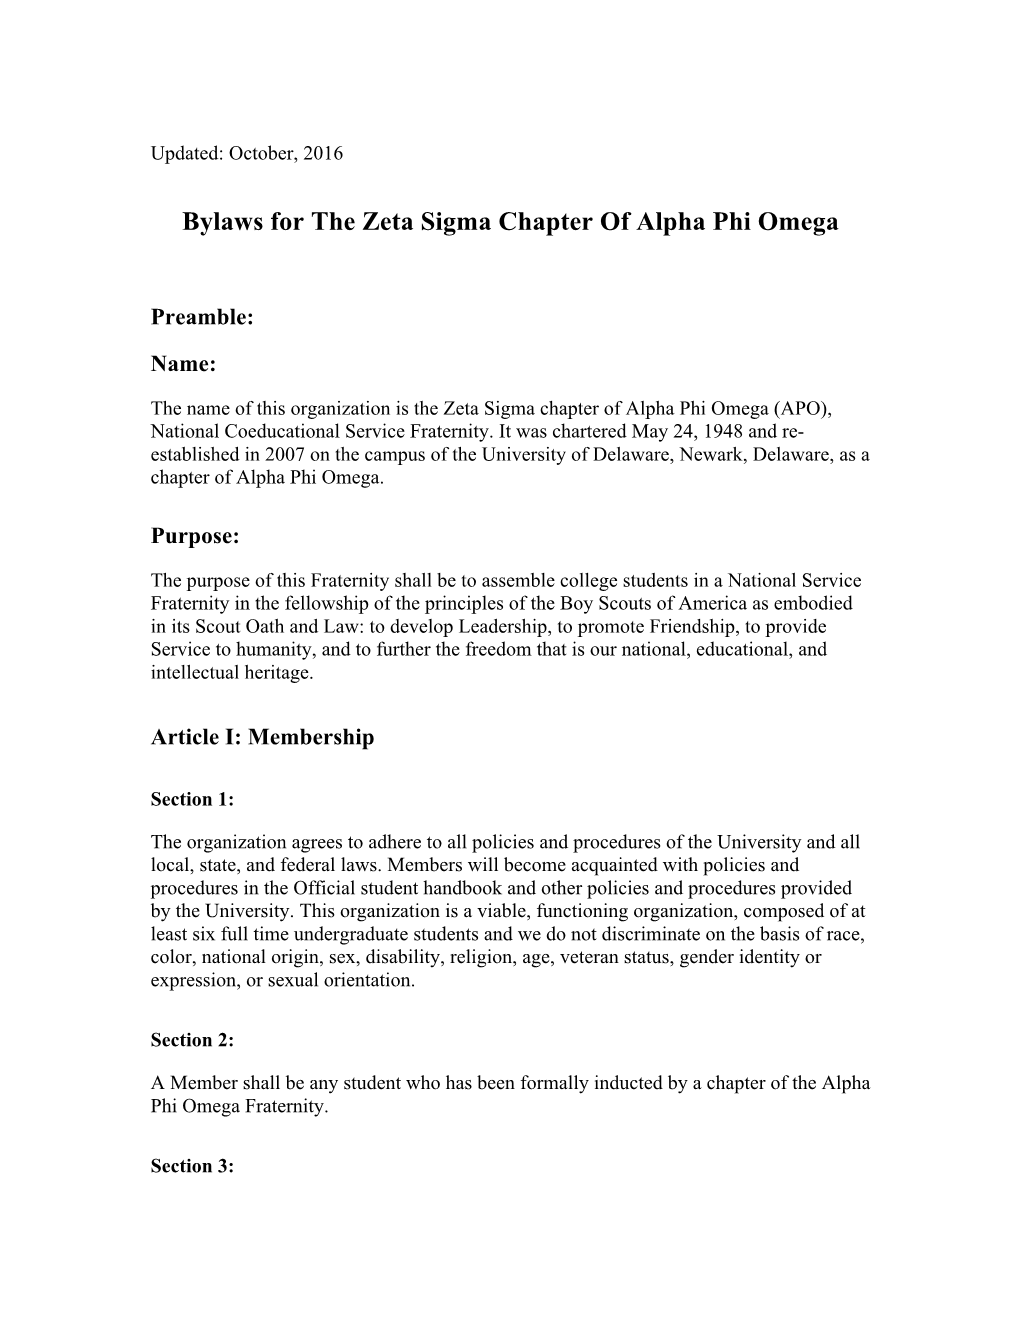 Bylaws for the Zeta Sigma Chapter of Alpha Phi Omega